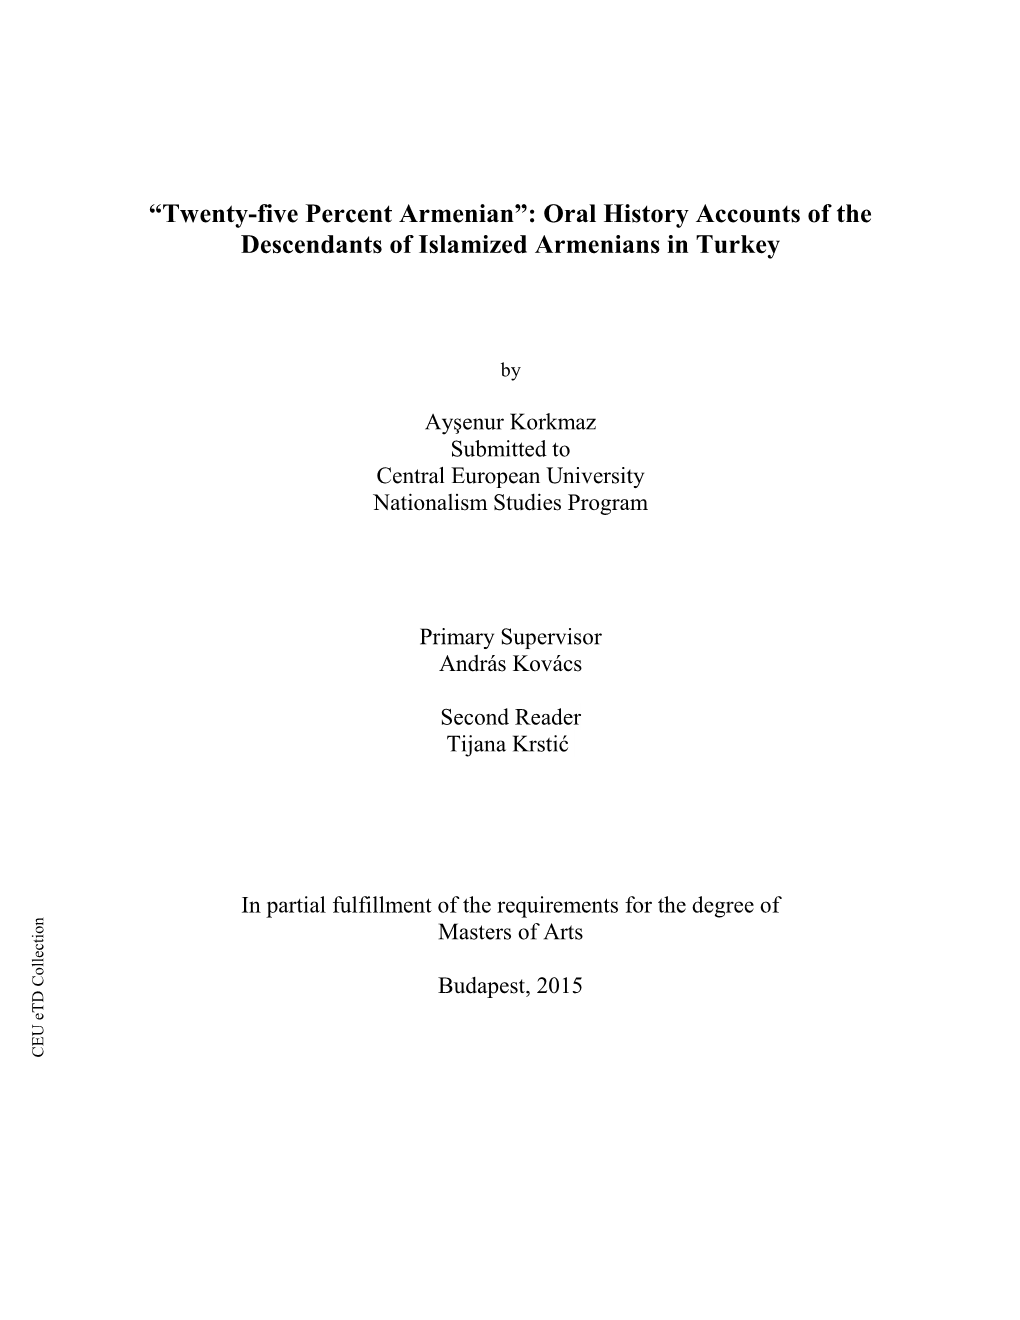 “Twenty-Five Percent Armenian”: Oral History Accounts of the Descendants of Islamized Armenians in Turkey